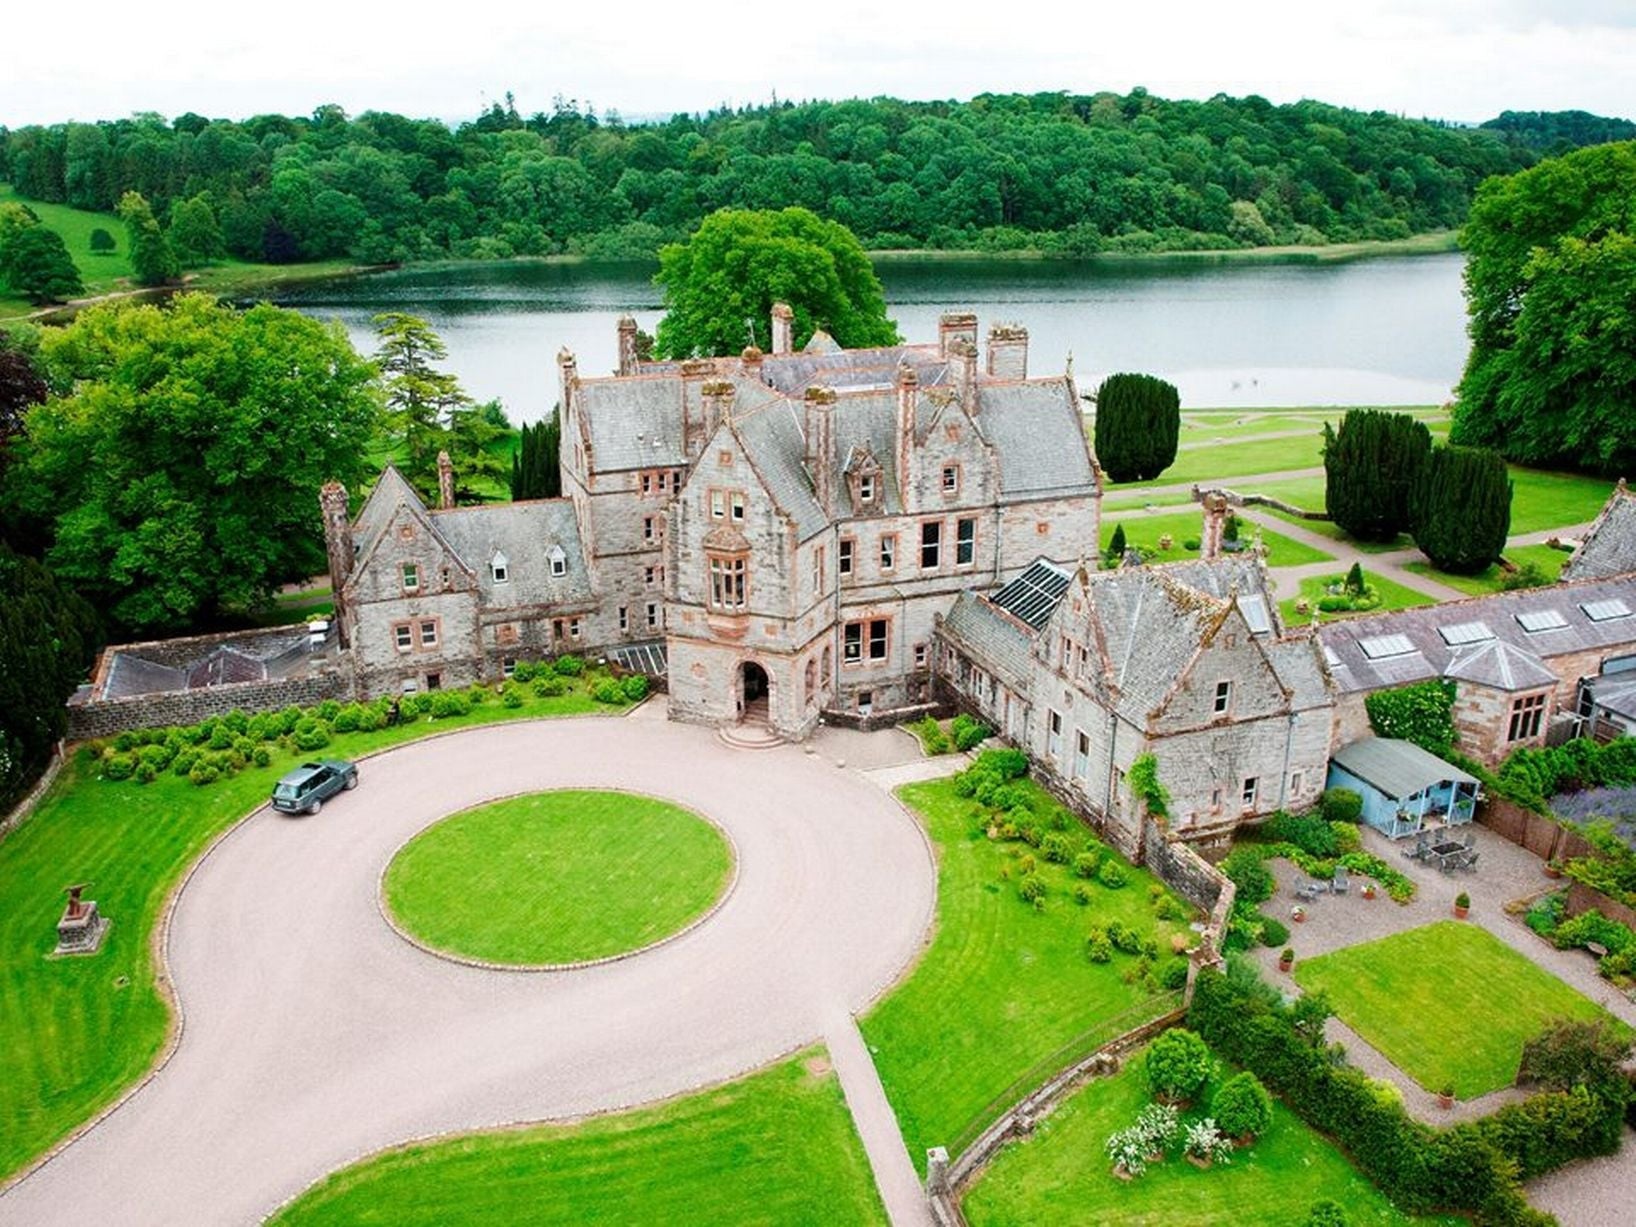 Castle Leslie offers Irish hospitality